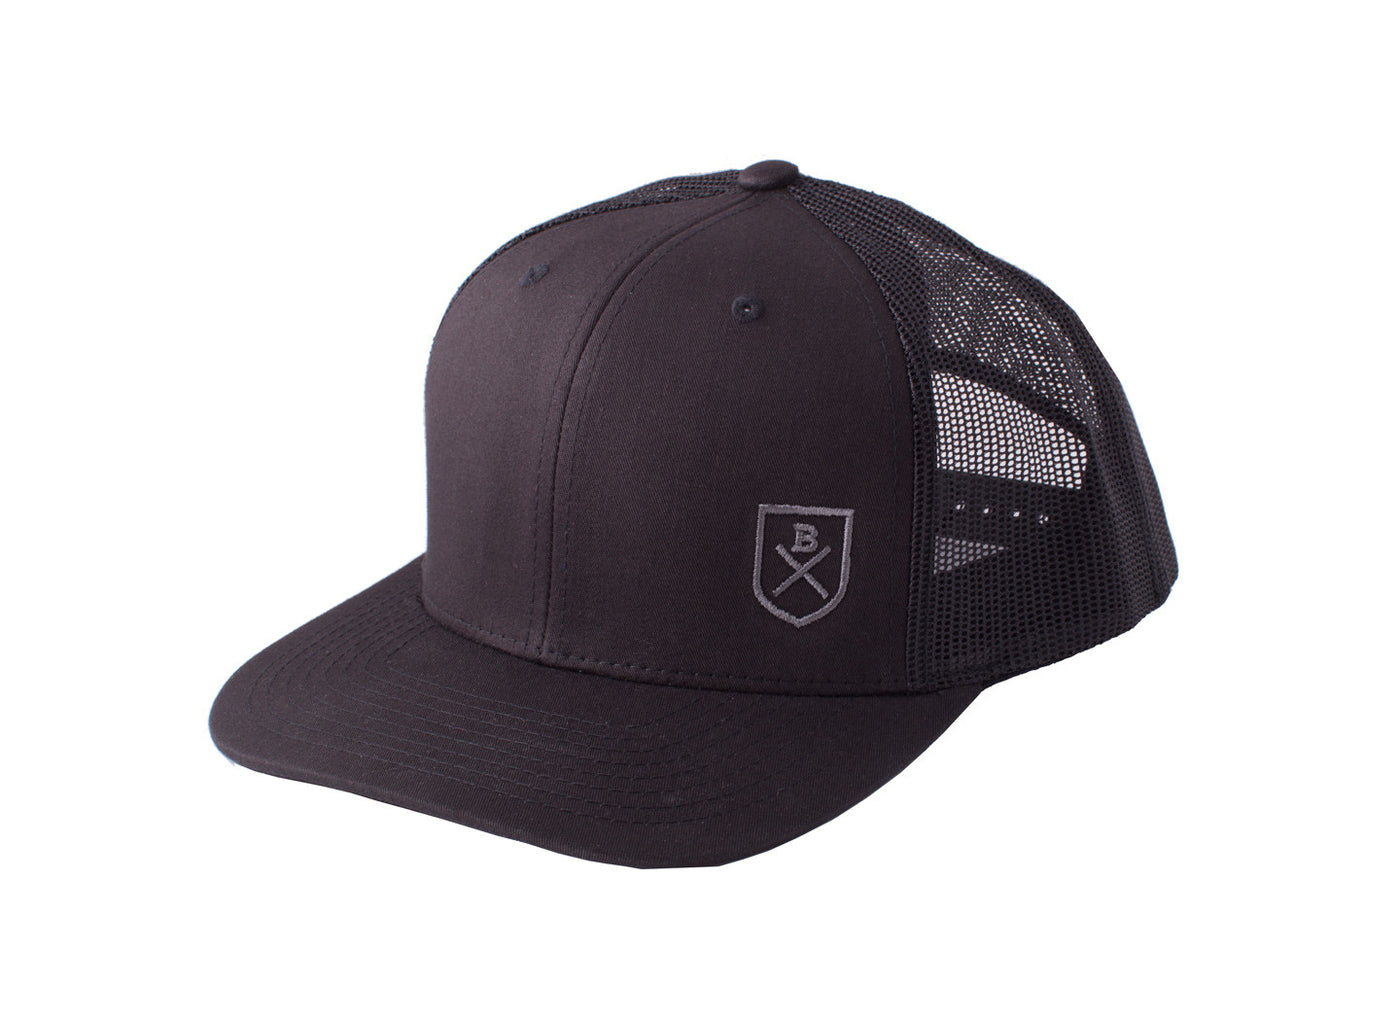 Bluesmiths Classic Trucker Cap - Black with Grey Shield Logo